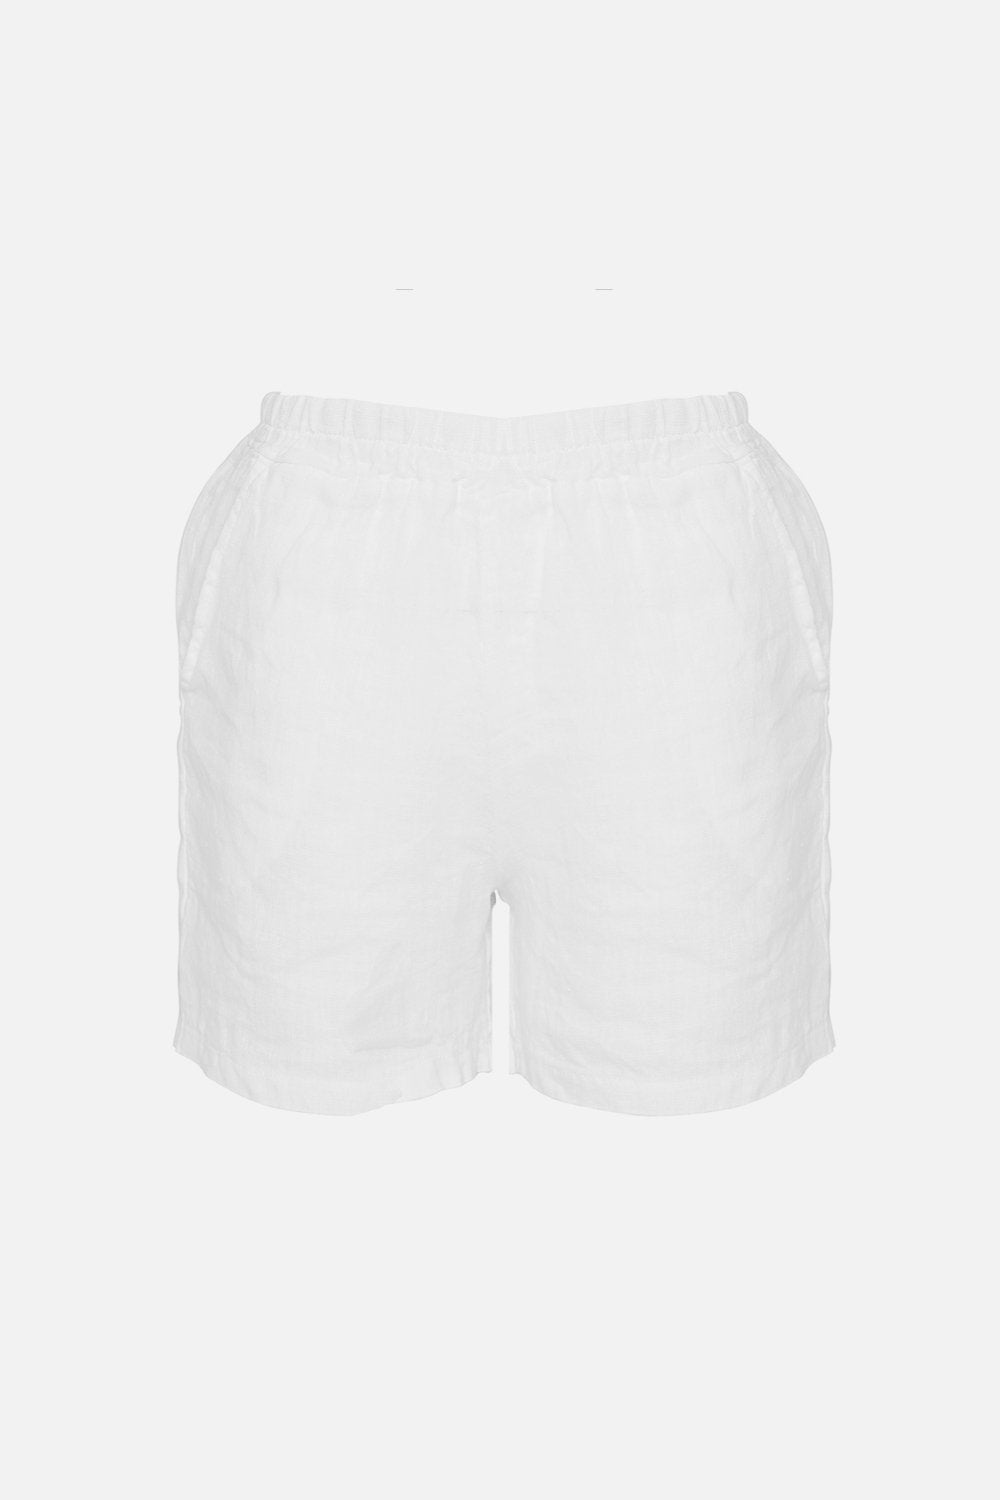 Zille Shorts Linen White